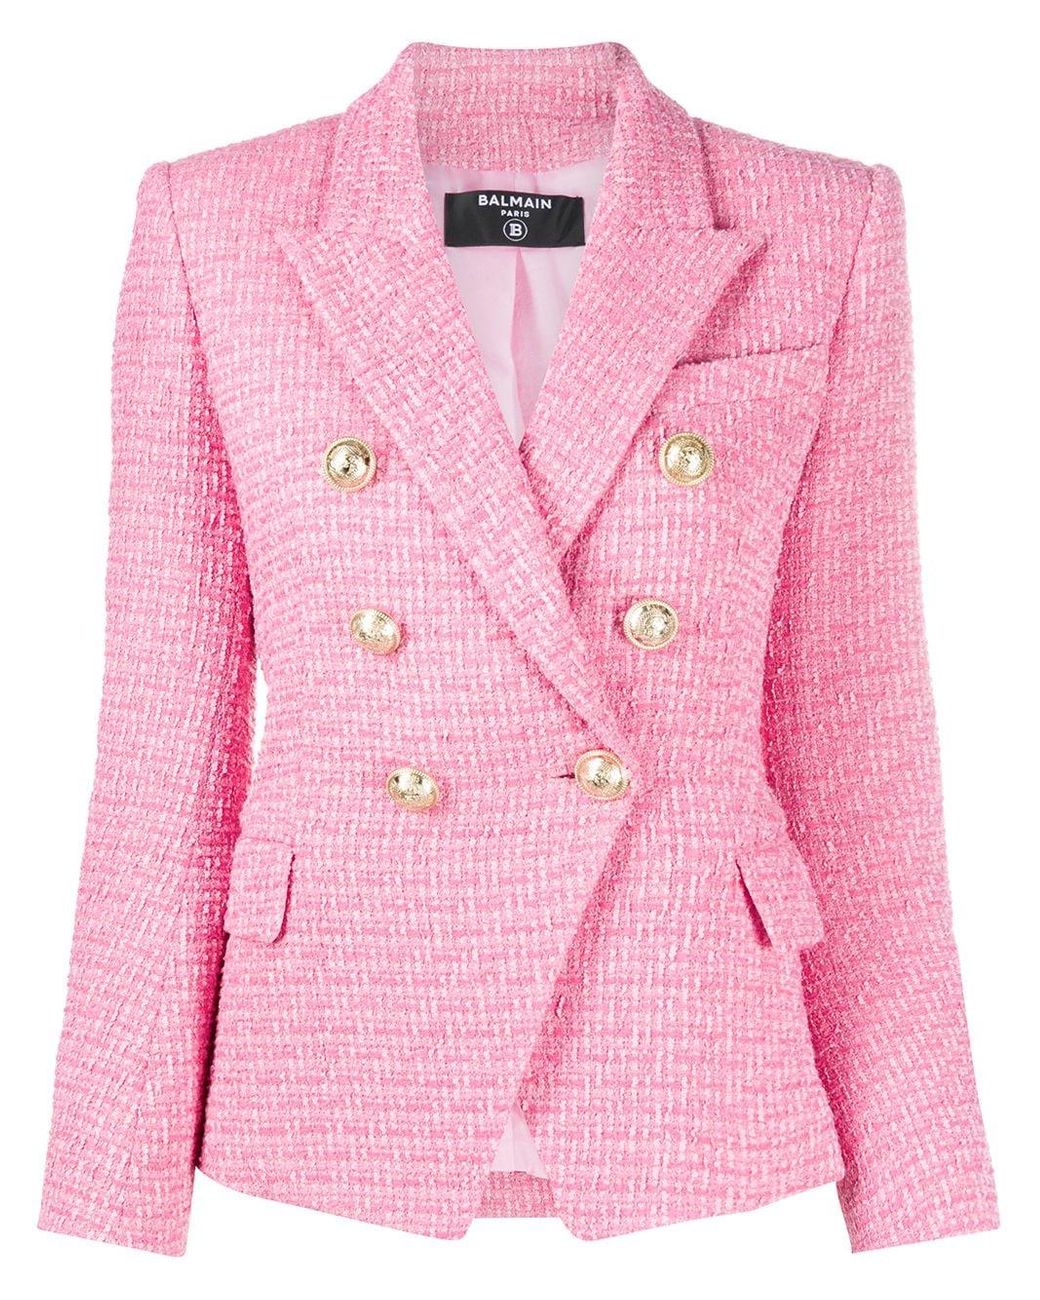 Balmain Double-breasted Tweed Blazer in Pink - Lyst